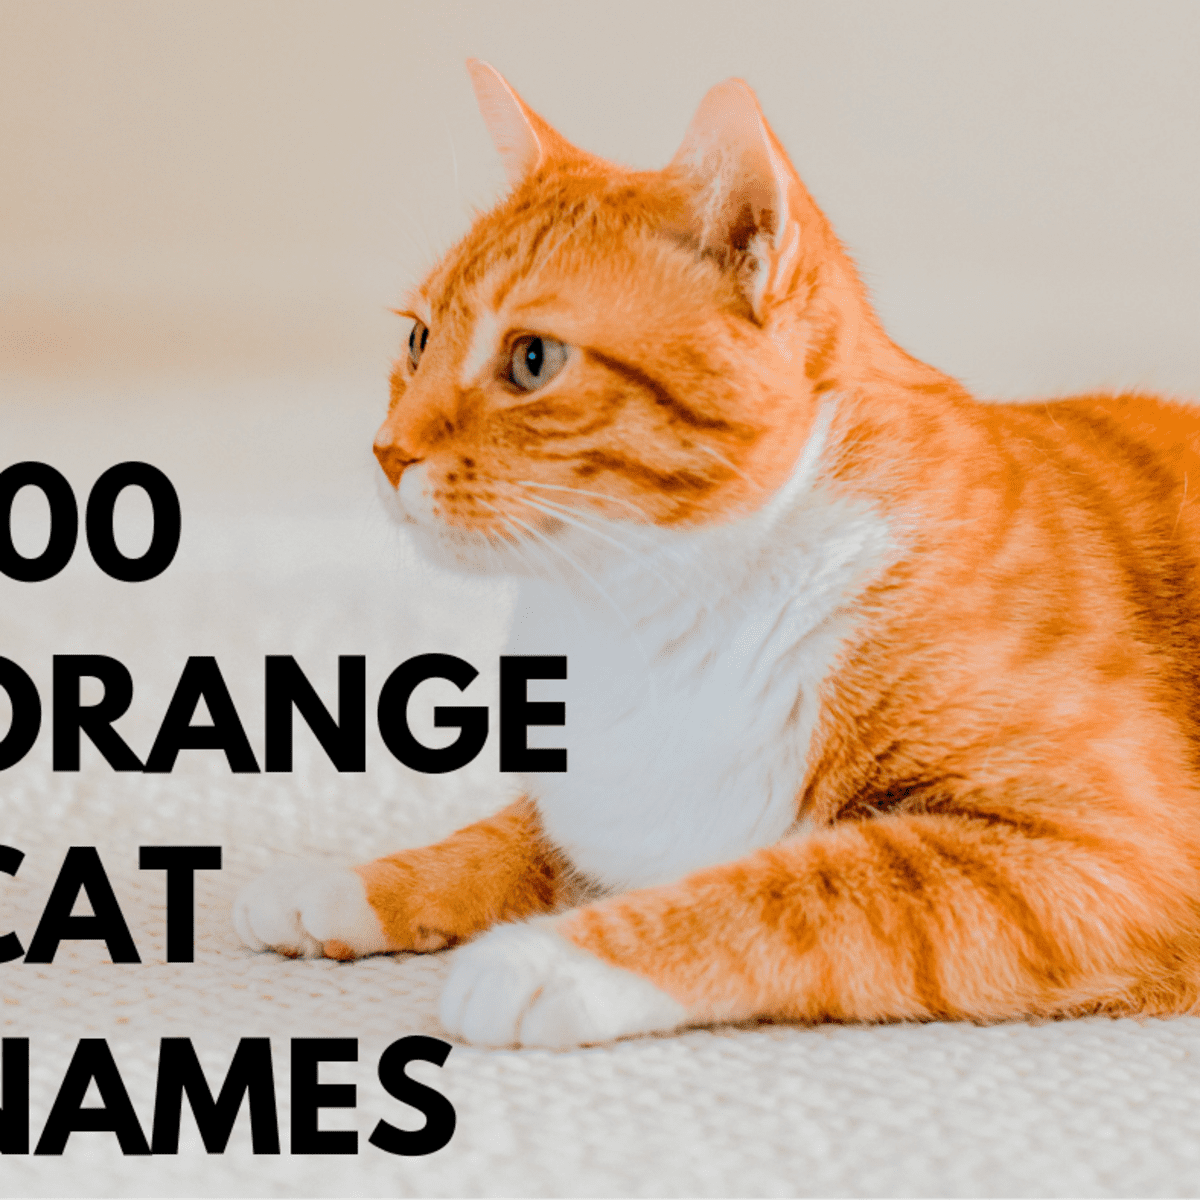 Top 100 Orange Cat Names - PetHelpful